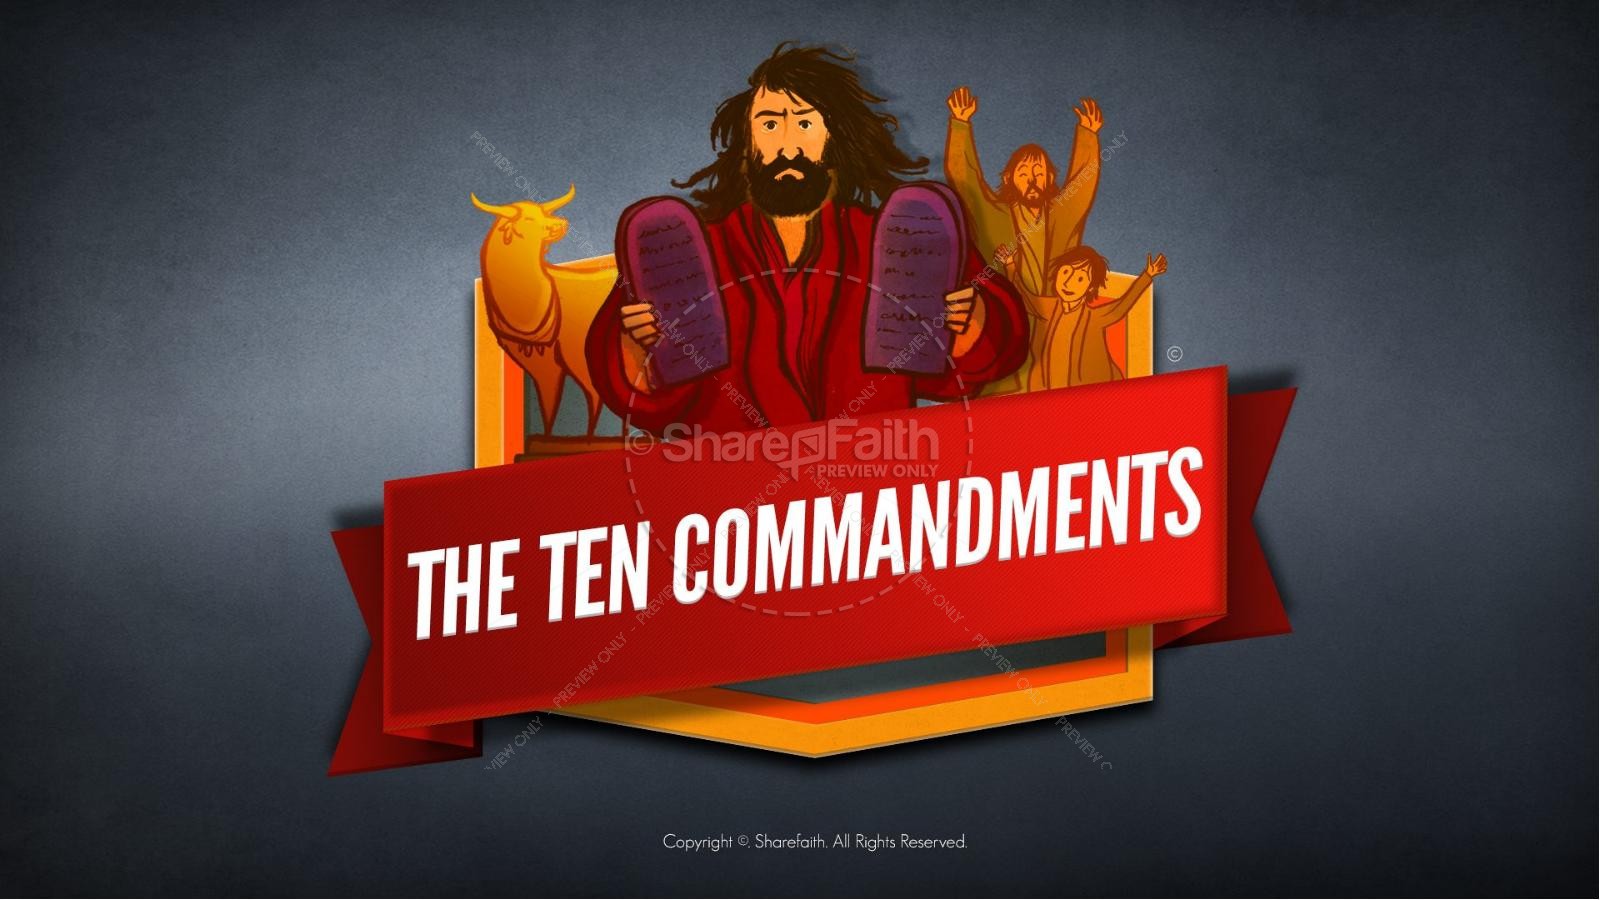 The Ten Commandments Kids Bible Stories